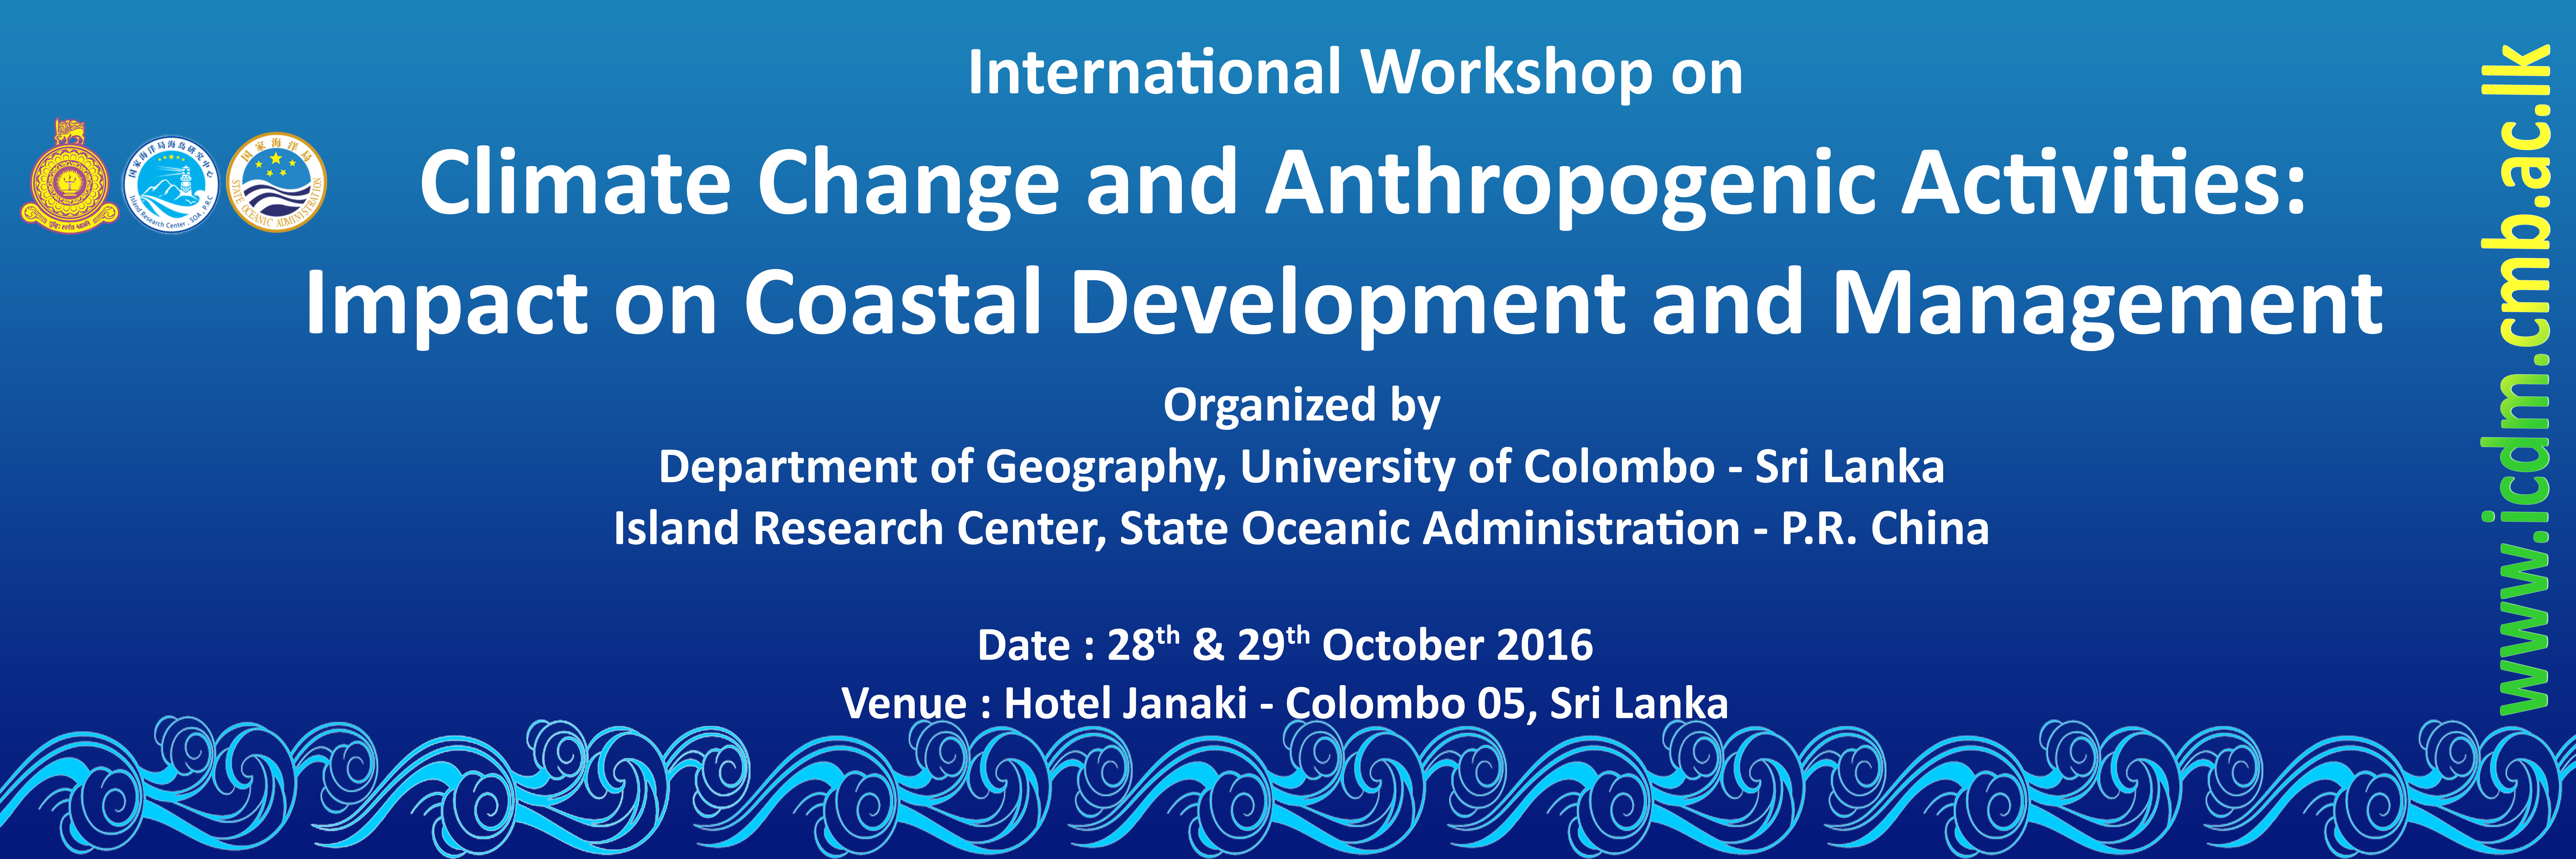 International Workshop on Climate Change and Anthropogenic Activities : Impact on Coastal Development and Management